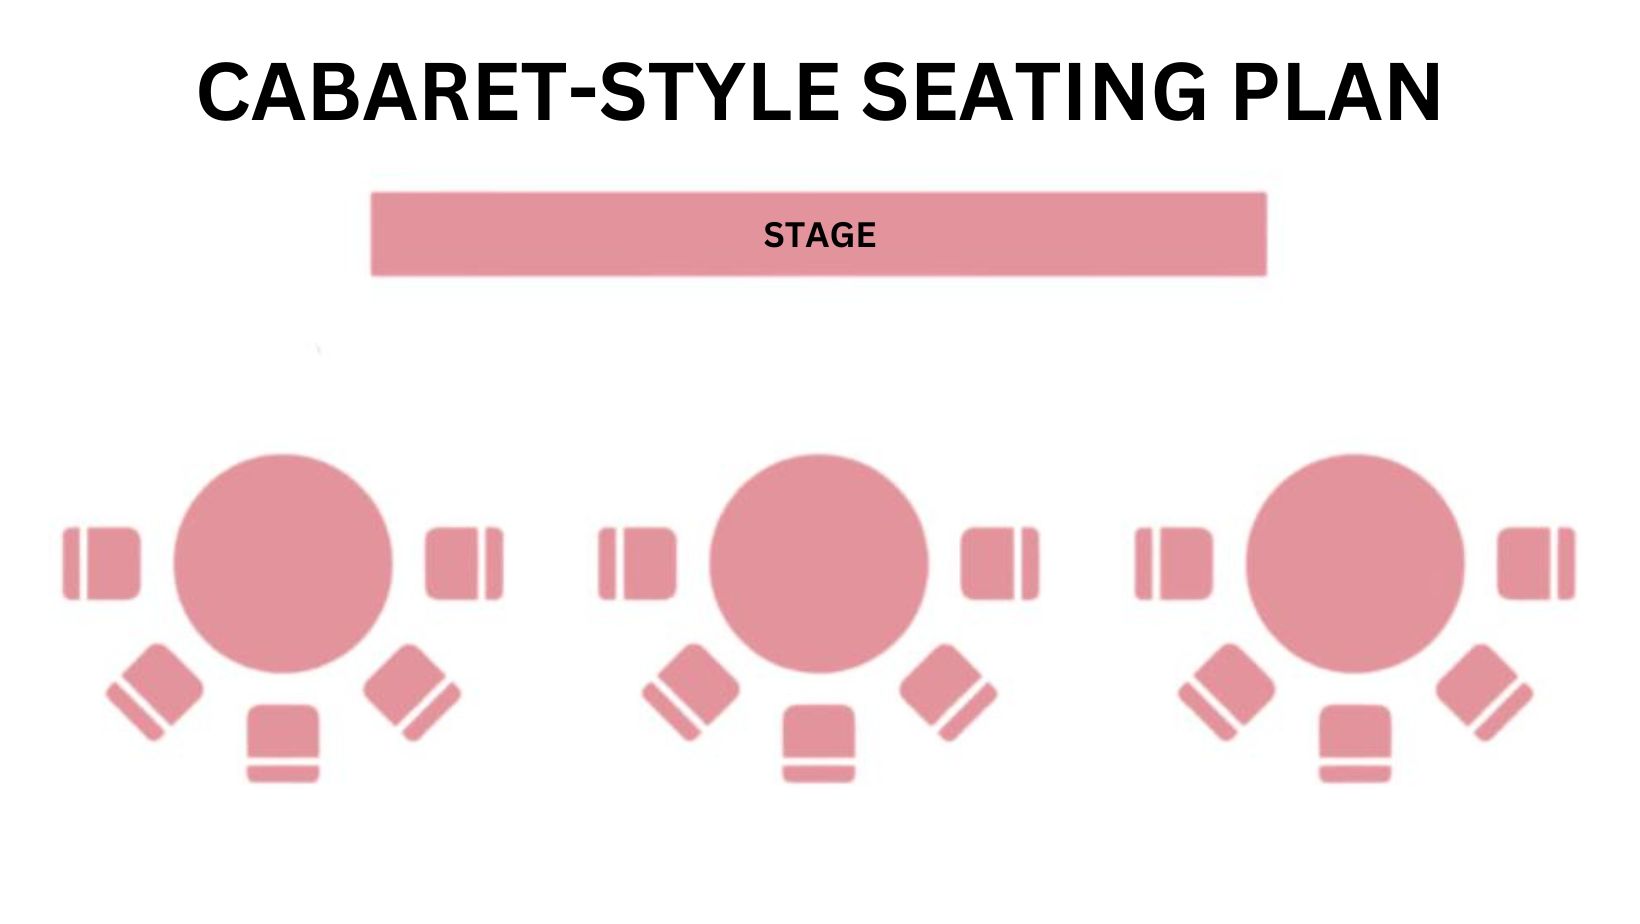 A Cabaret-Style Seating Plan